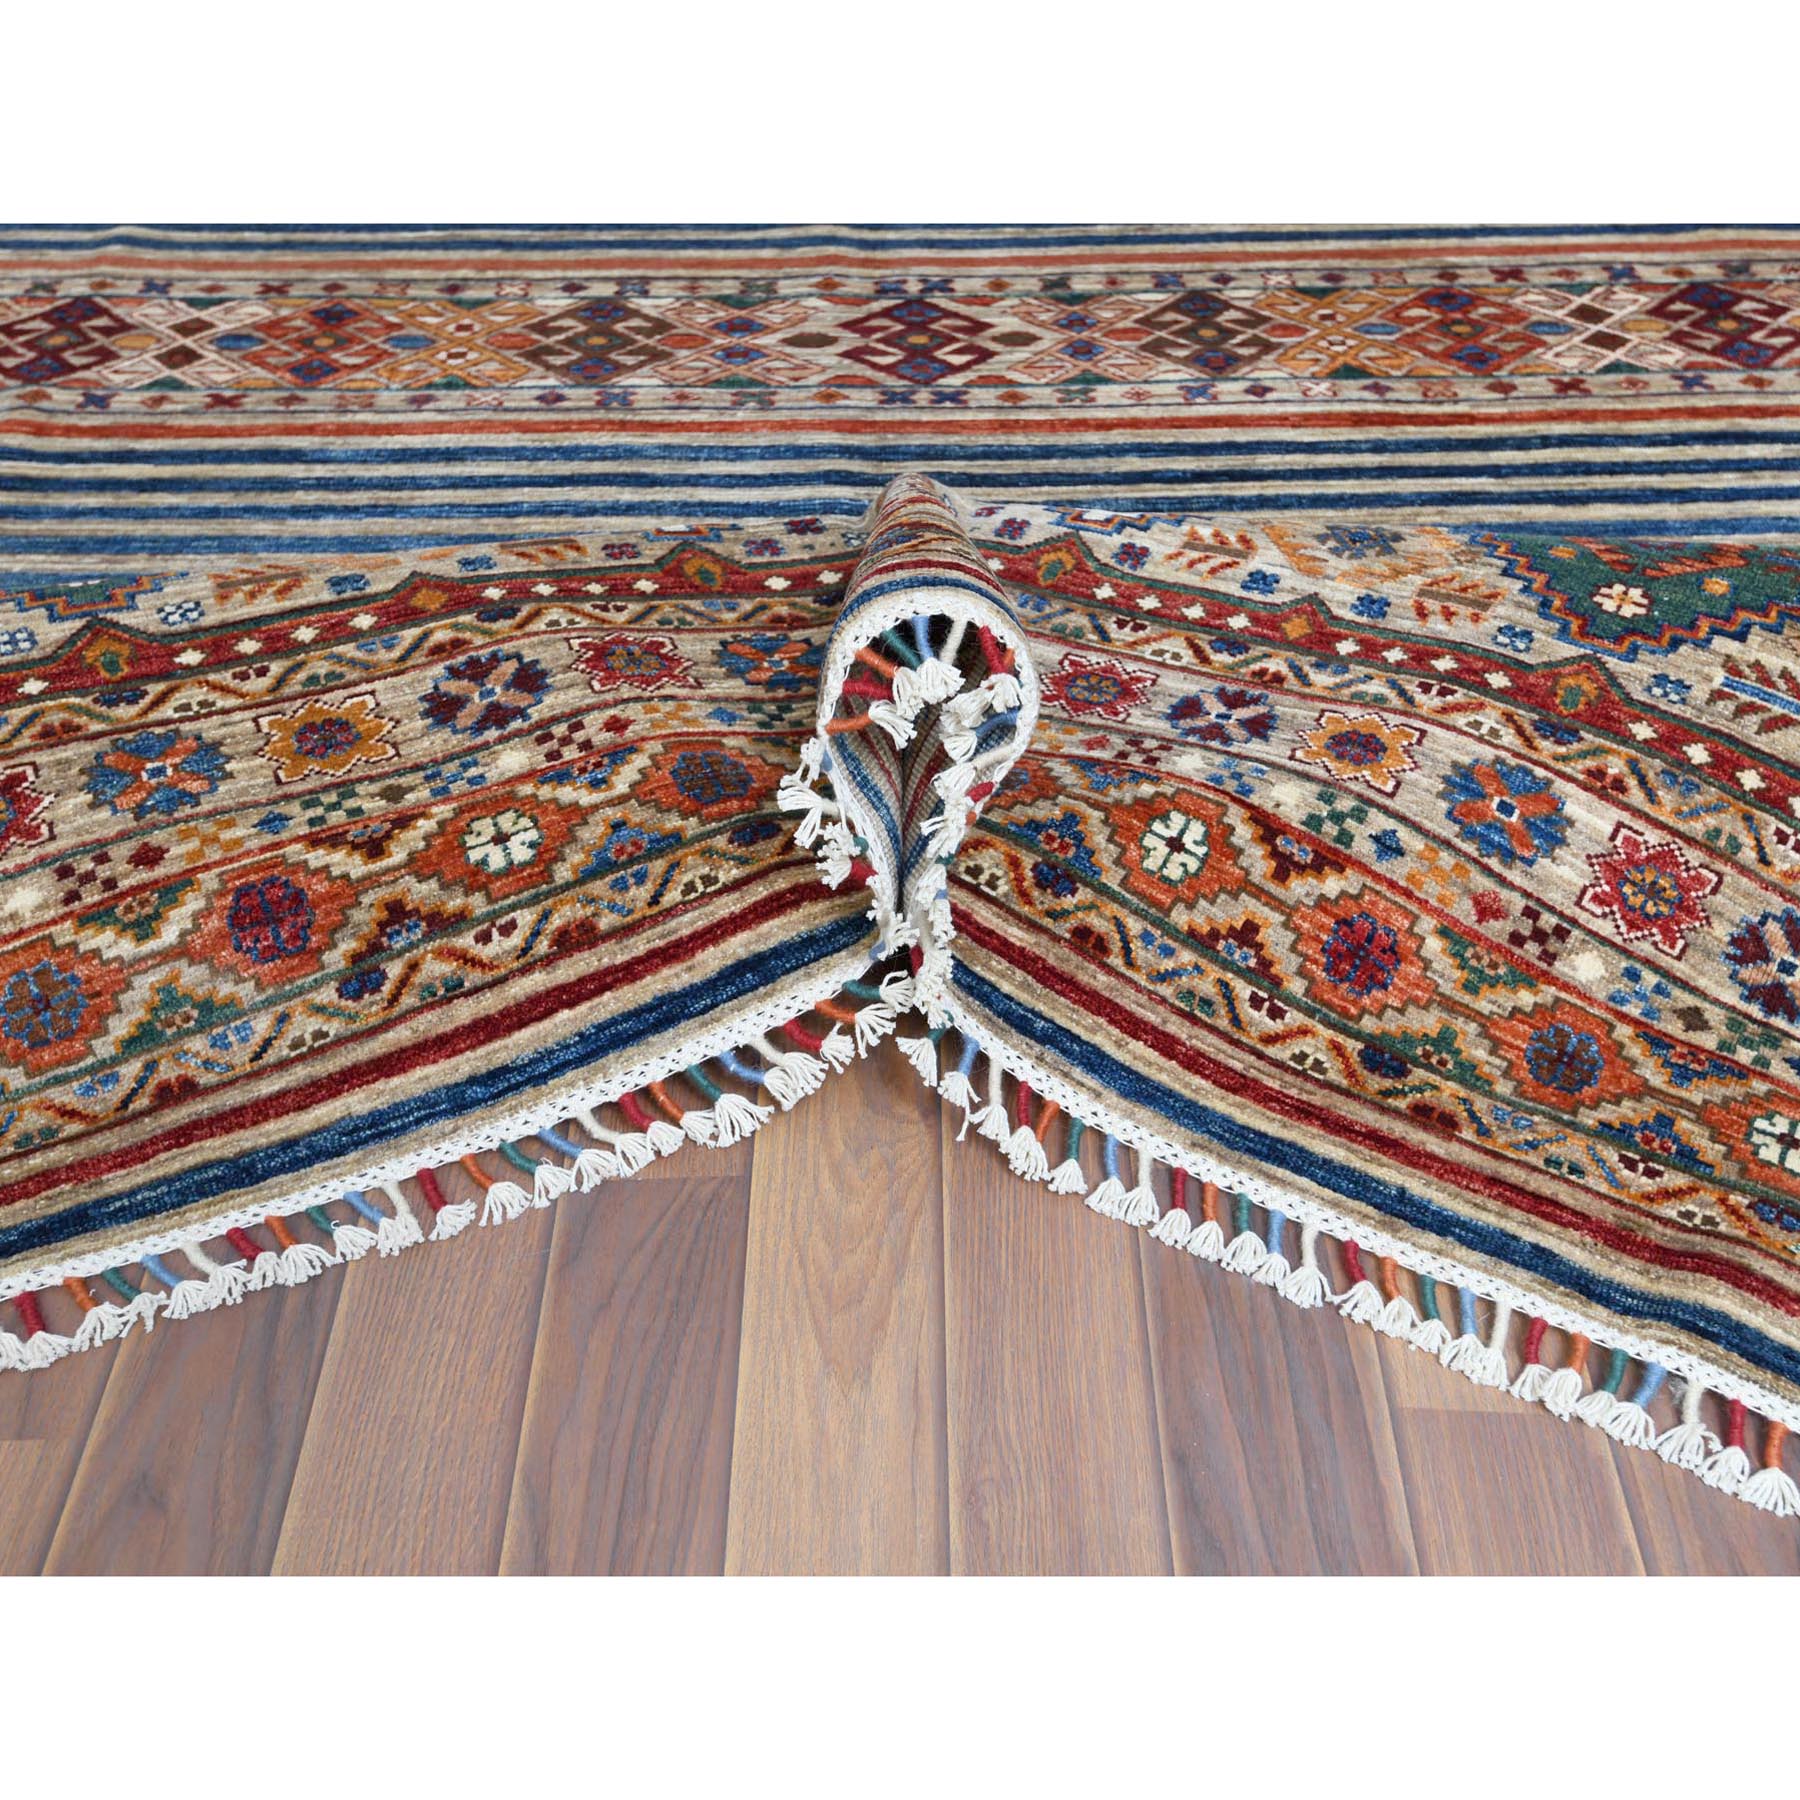 8'5"x10" Hand Woven Taupe Super Kazak with Colorful Tassels Khorjin Design Natural Wool Oriental Rug 